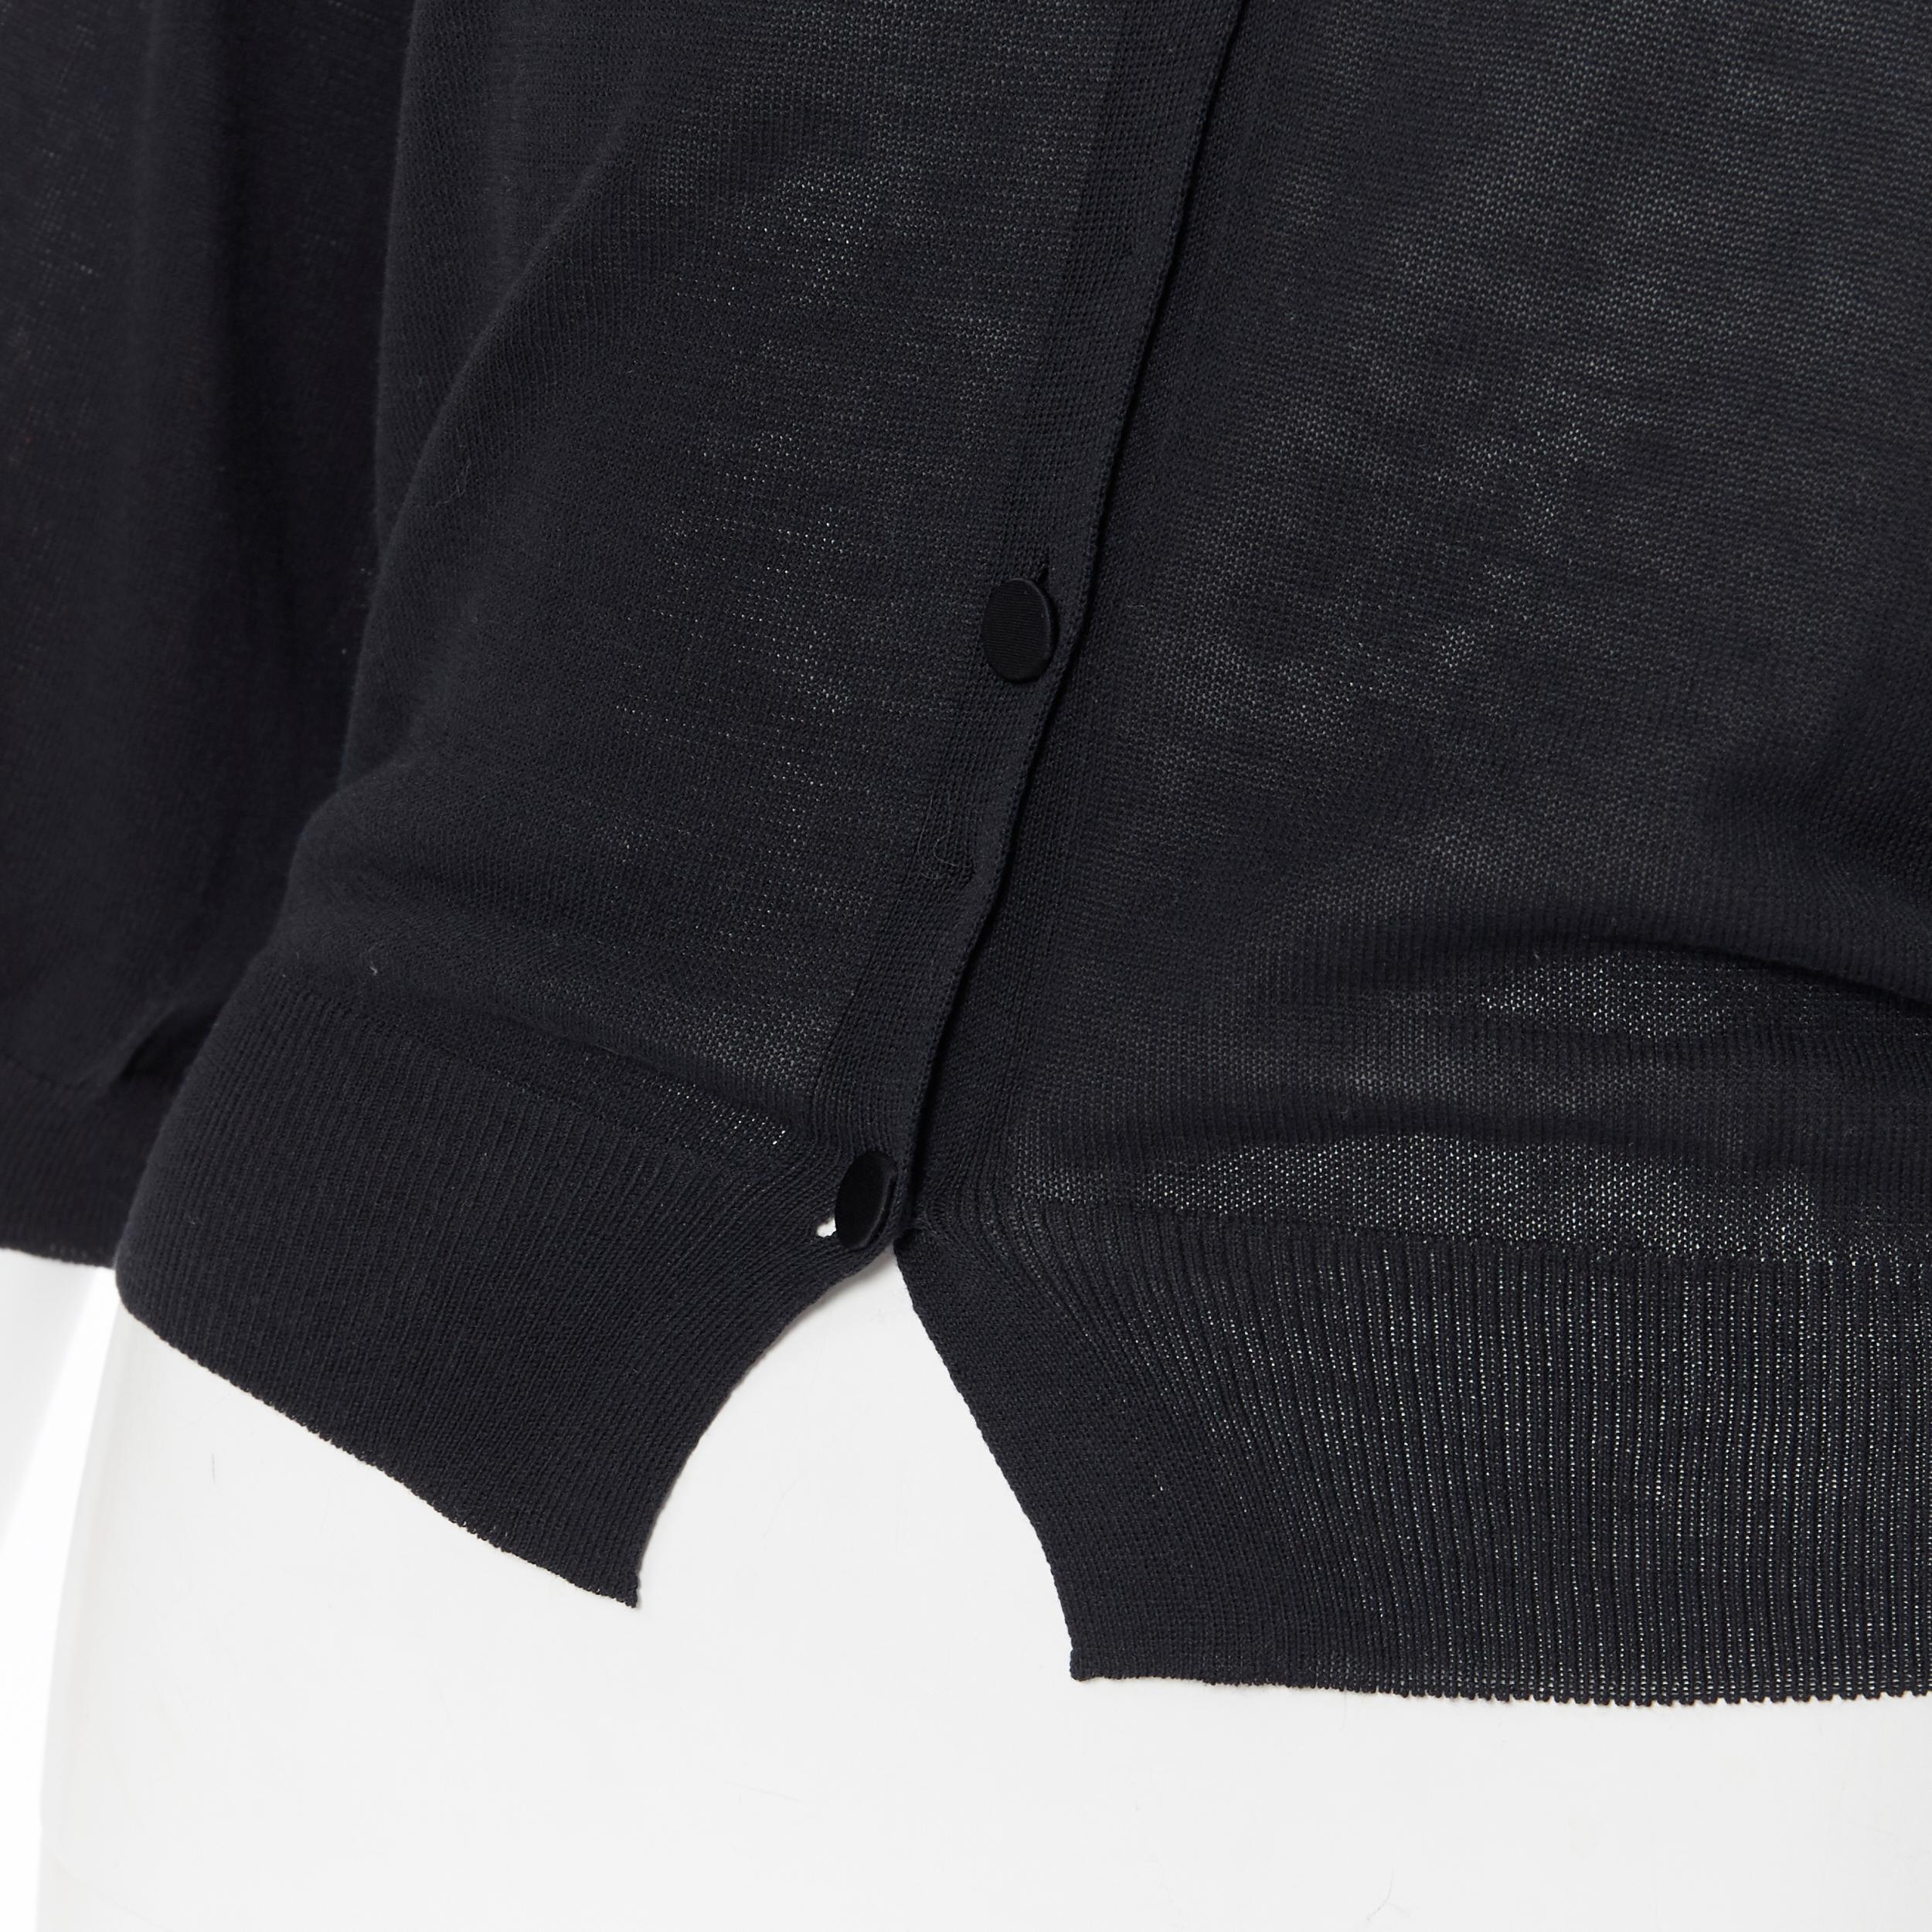 LANVIN Elbaz 2005 100% cotton wide sleeve silk button cardigan sweater XS 1